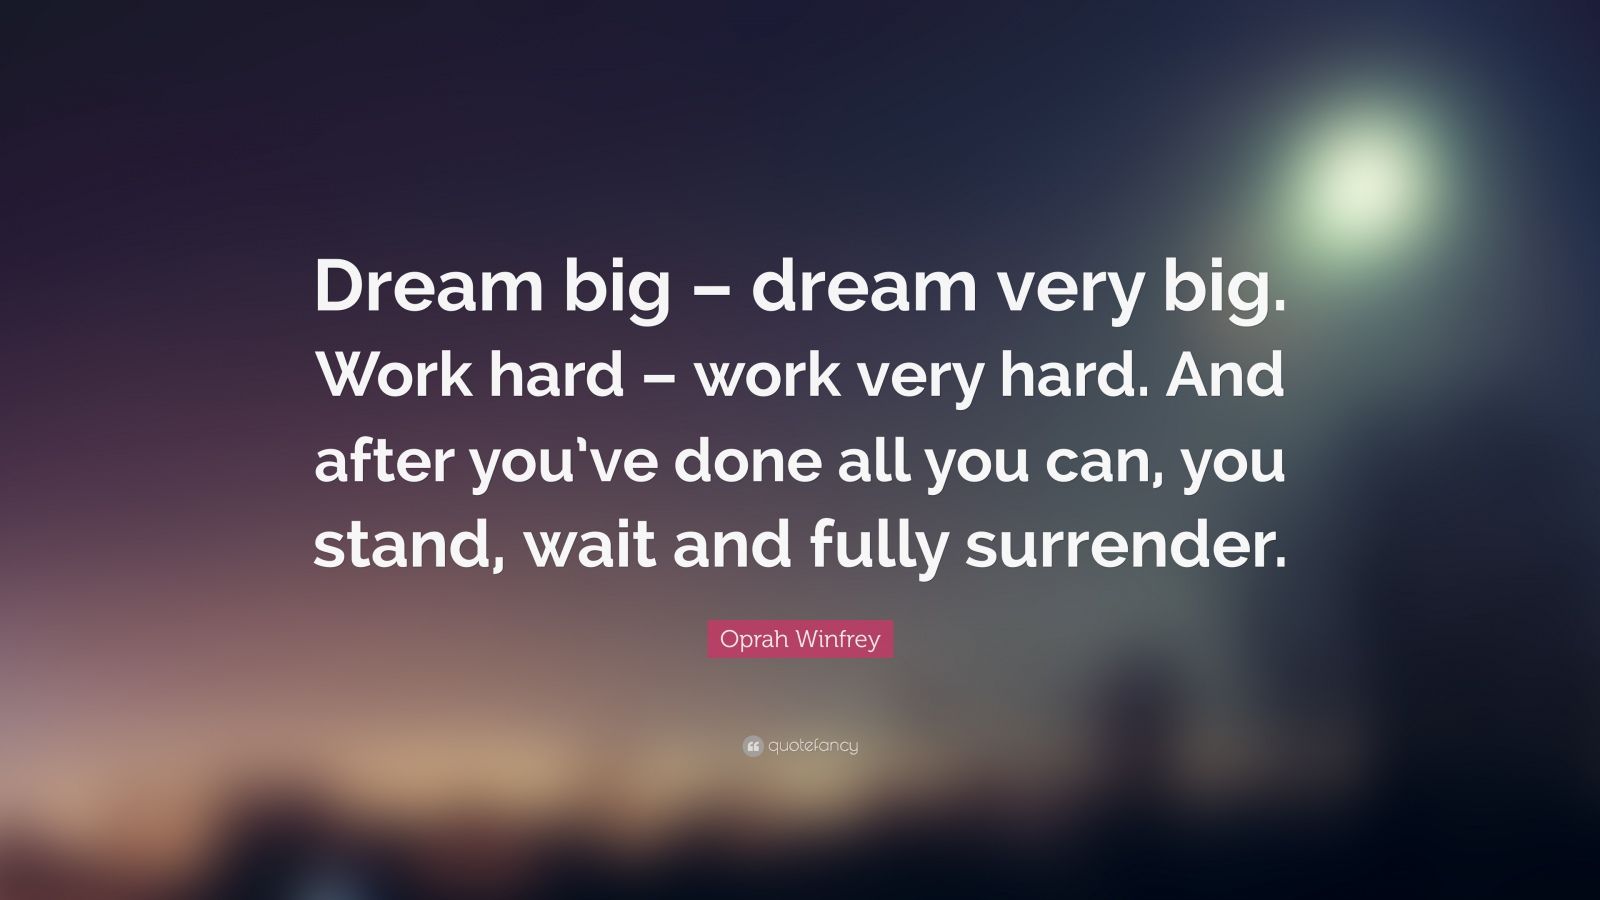 Oprah Winfrey Quote: “Dream big – dream very big. Work hard – work very